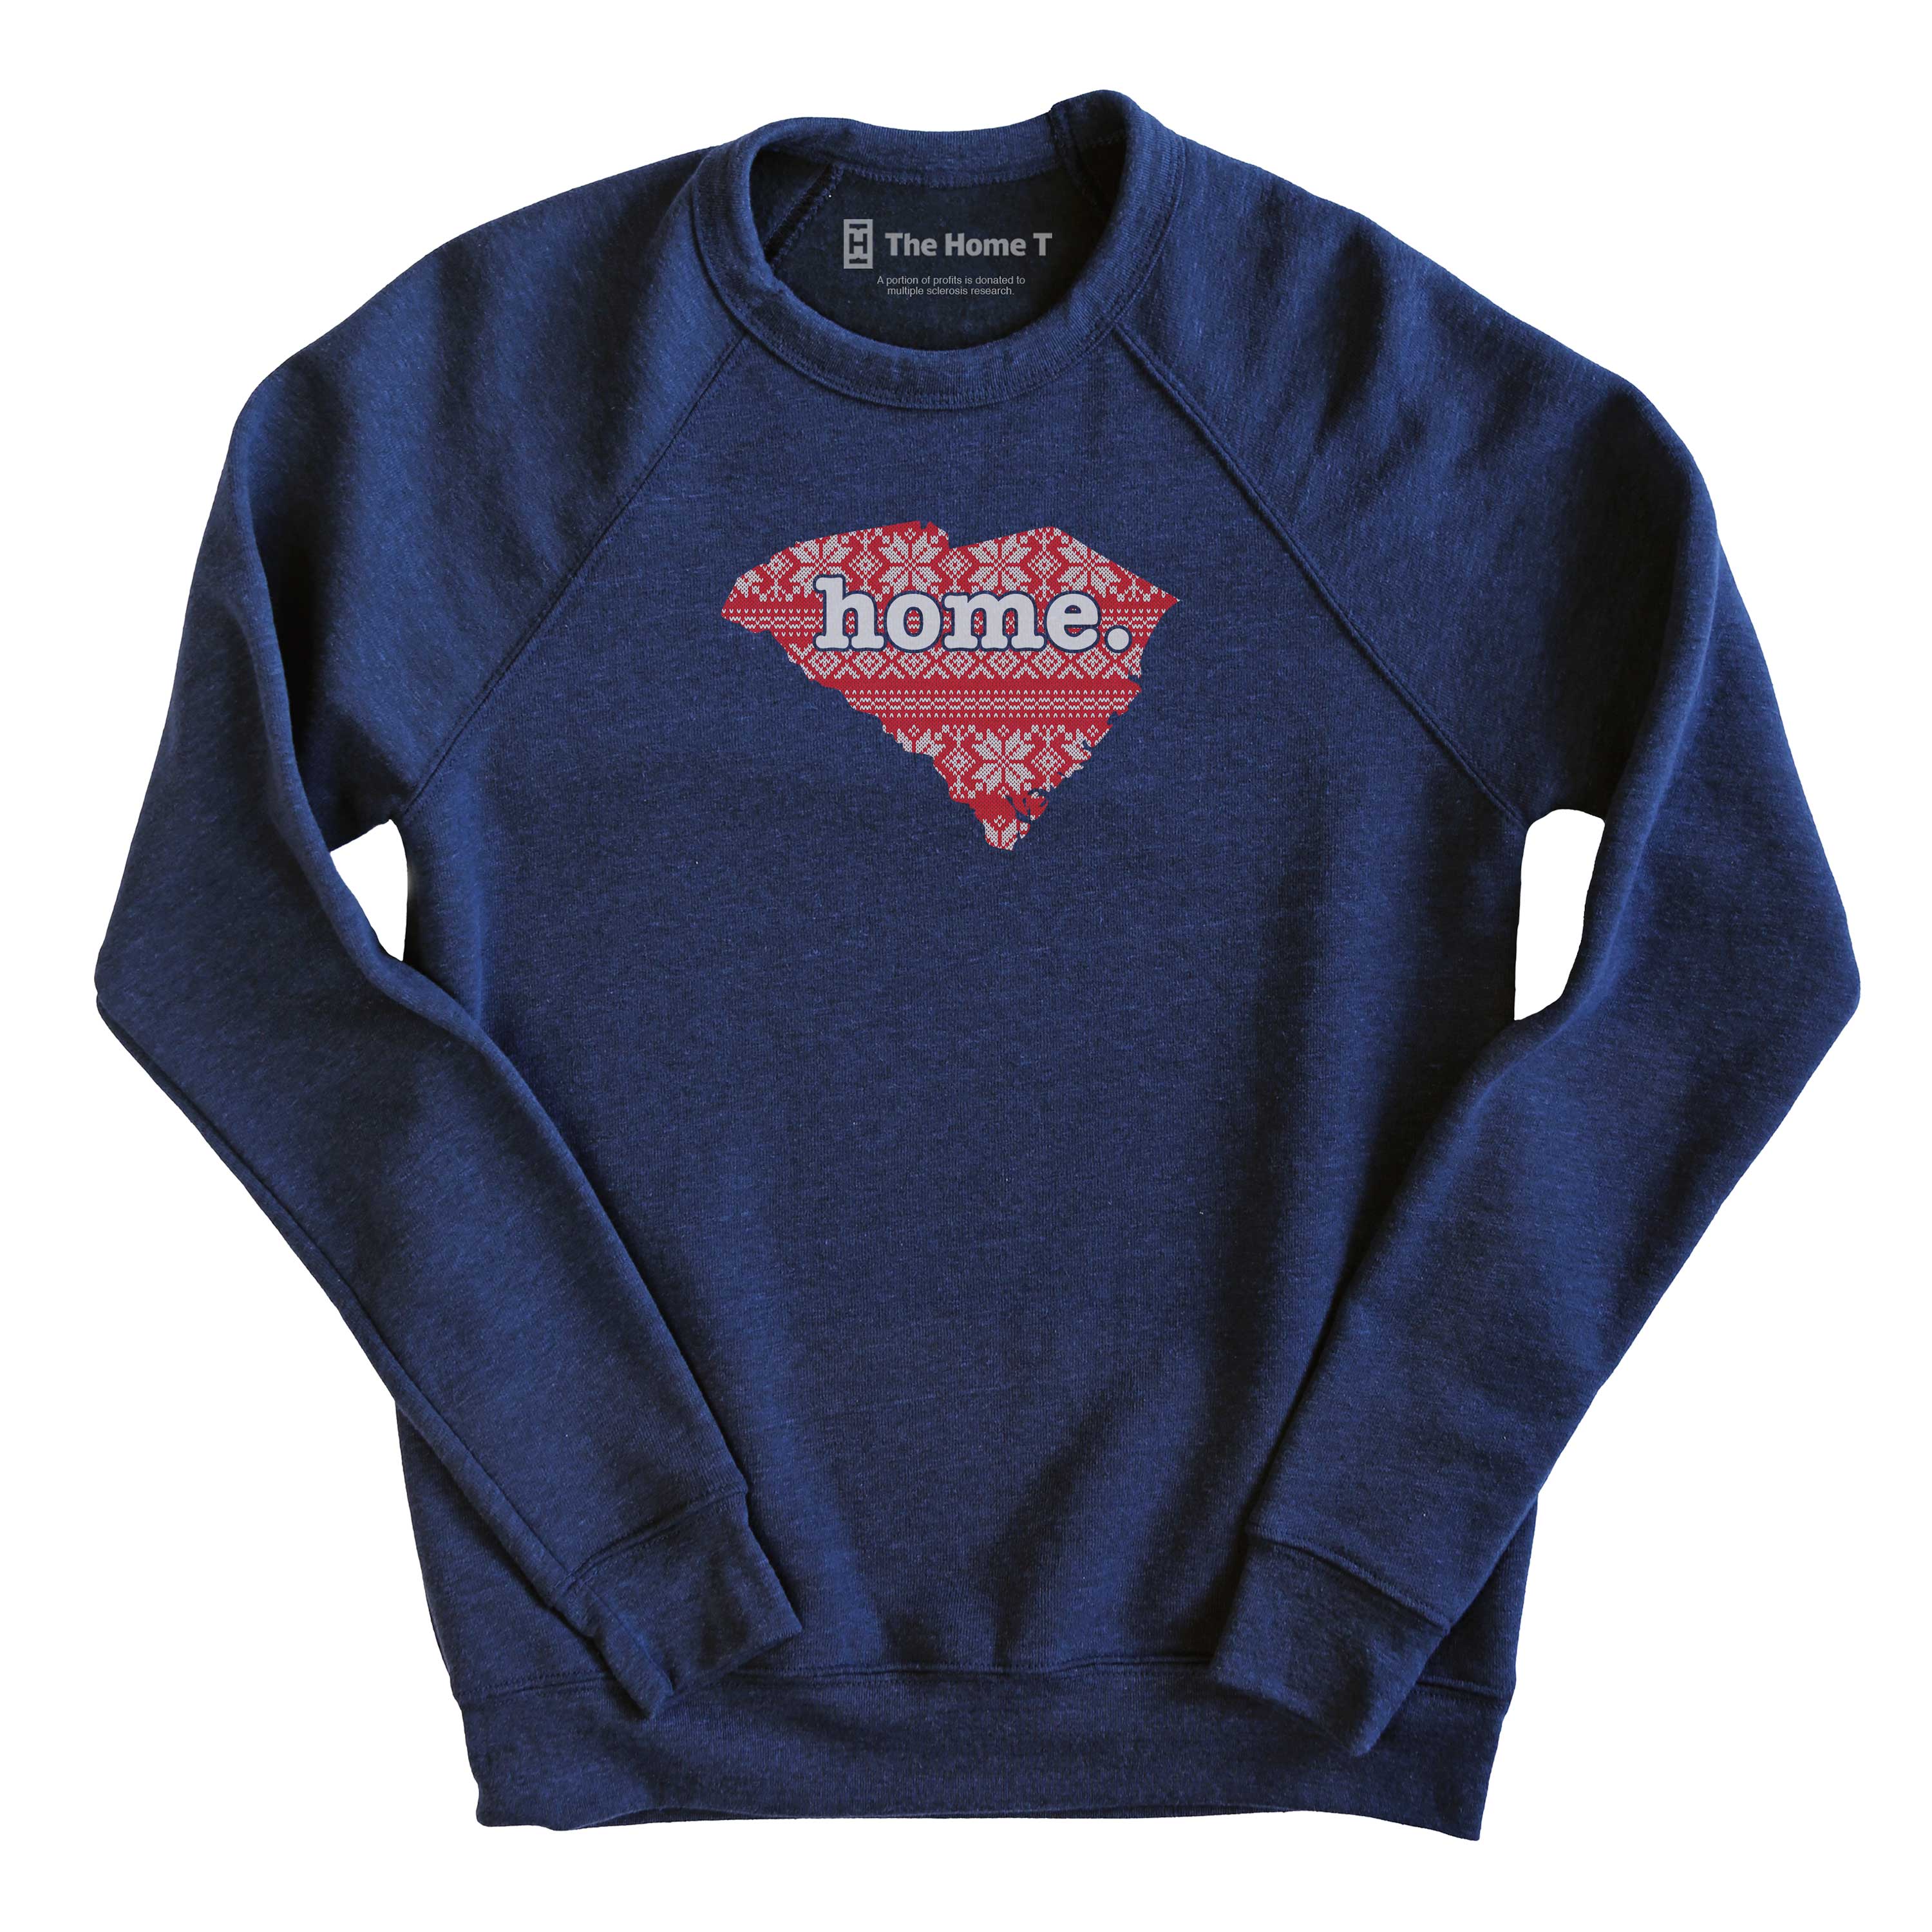 South Carolina Christmas Sweater Pattern Christmas Sweater The Home T XS Navy Sweatshirt